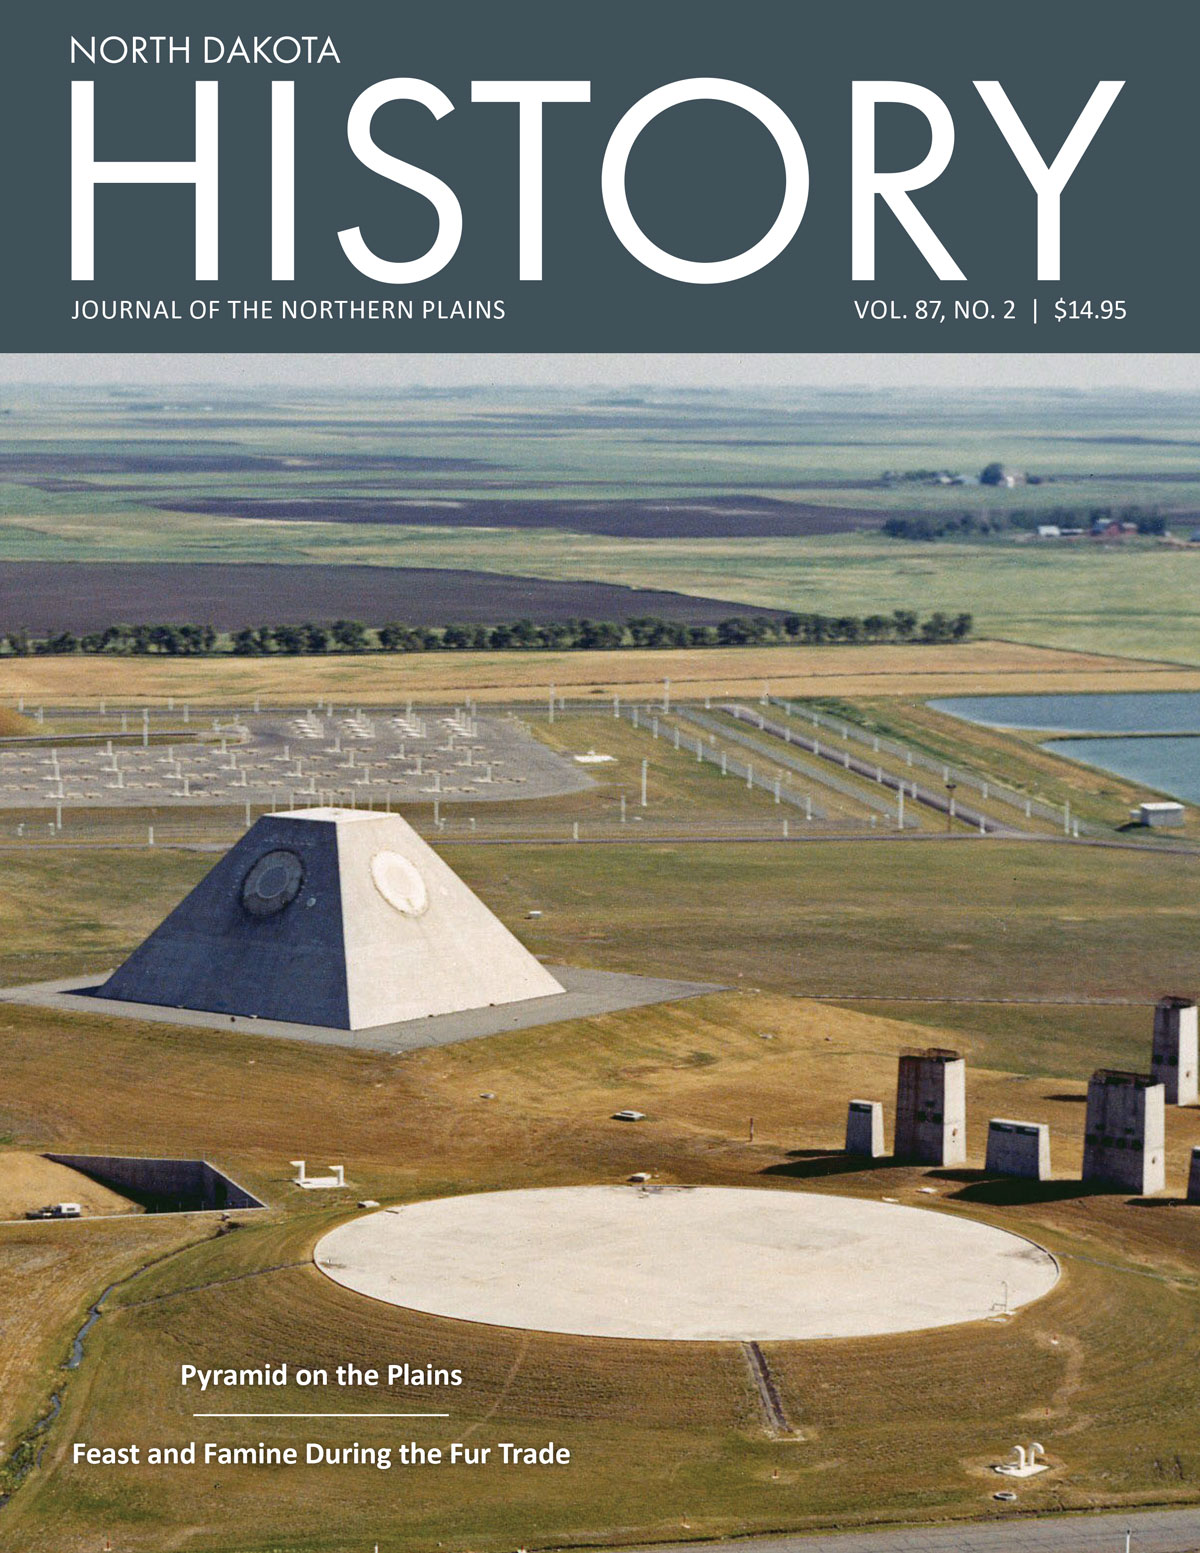 North Dakota History current issue